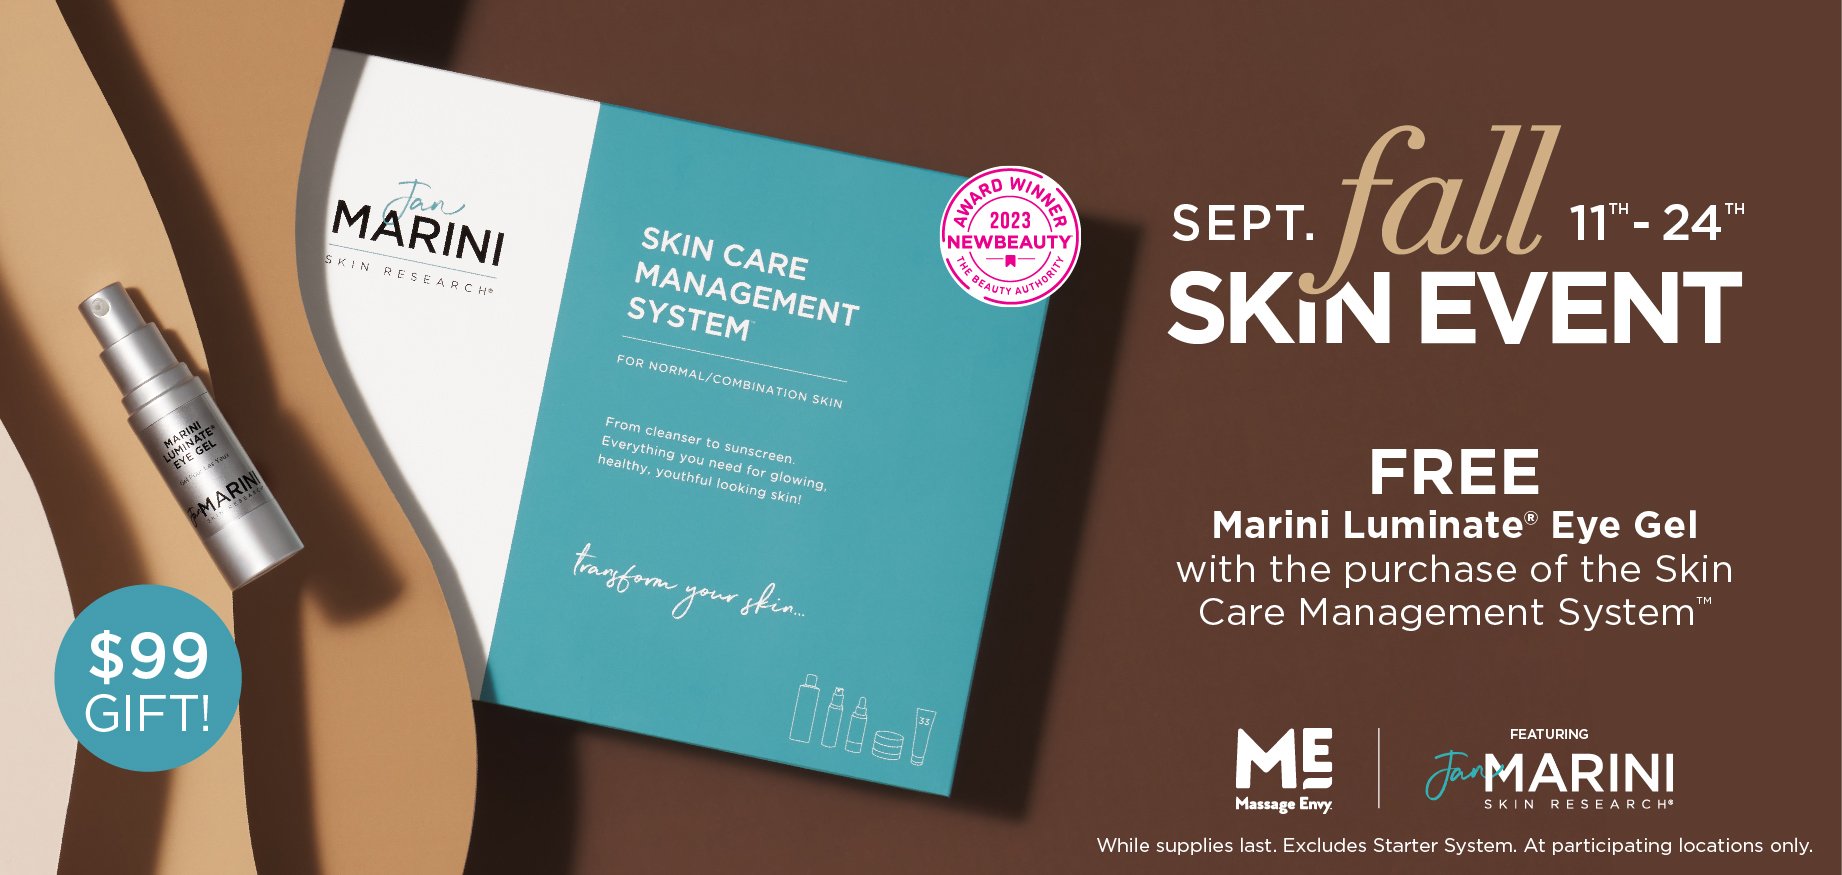 The Fall Skin Event (September 11-24)